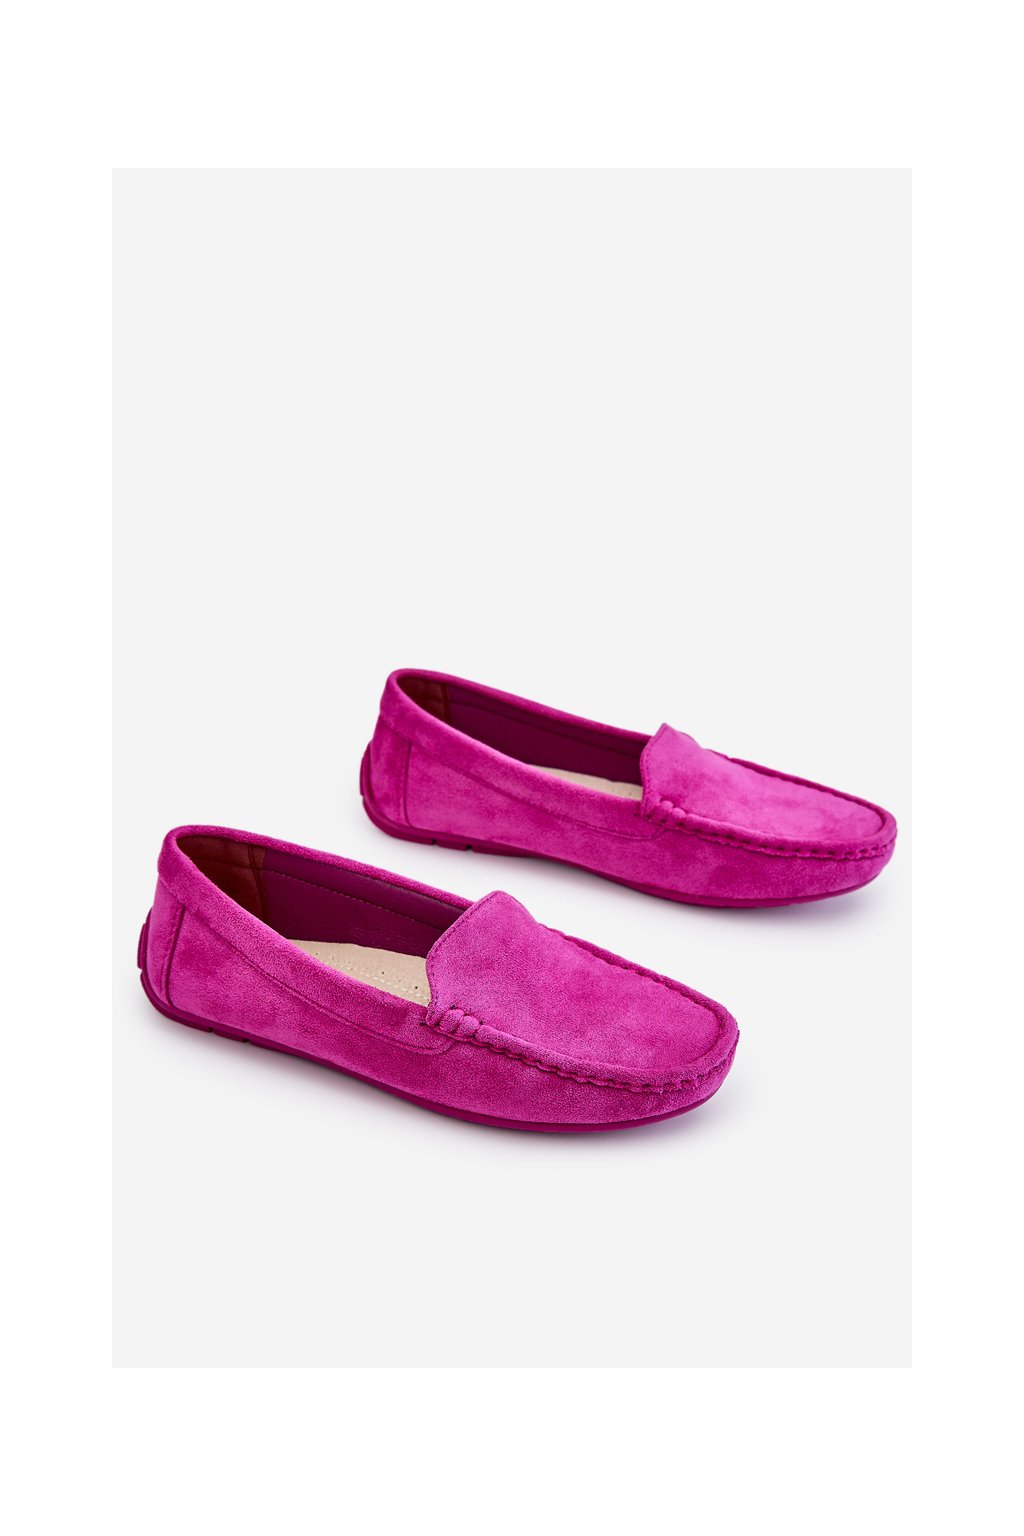 Dámske mokasíny farba fialová kód obuvi 20PB26-2190 PURPLE